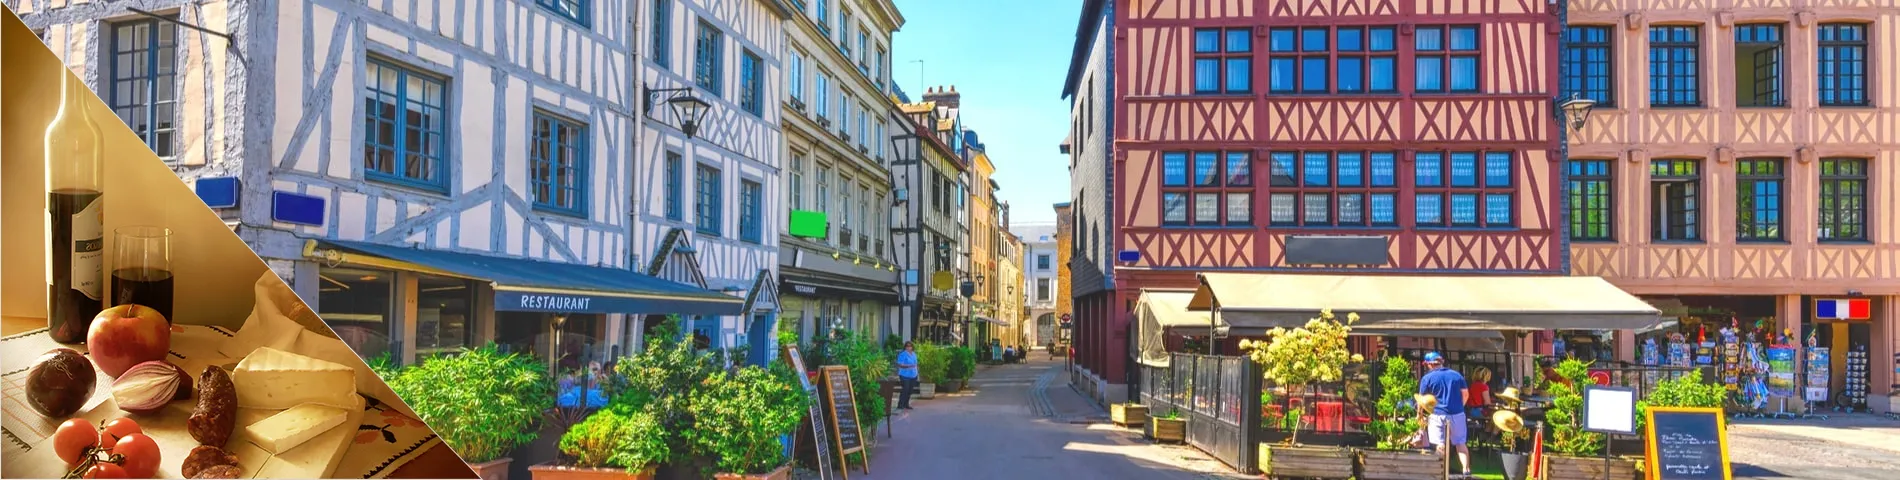 Rouen - Francouzština a Kultura